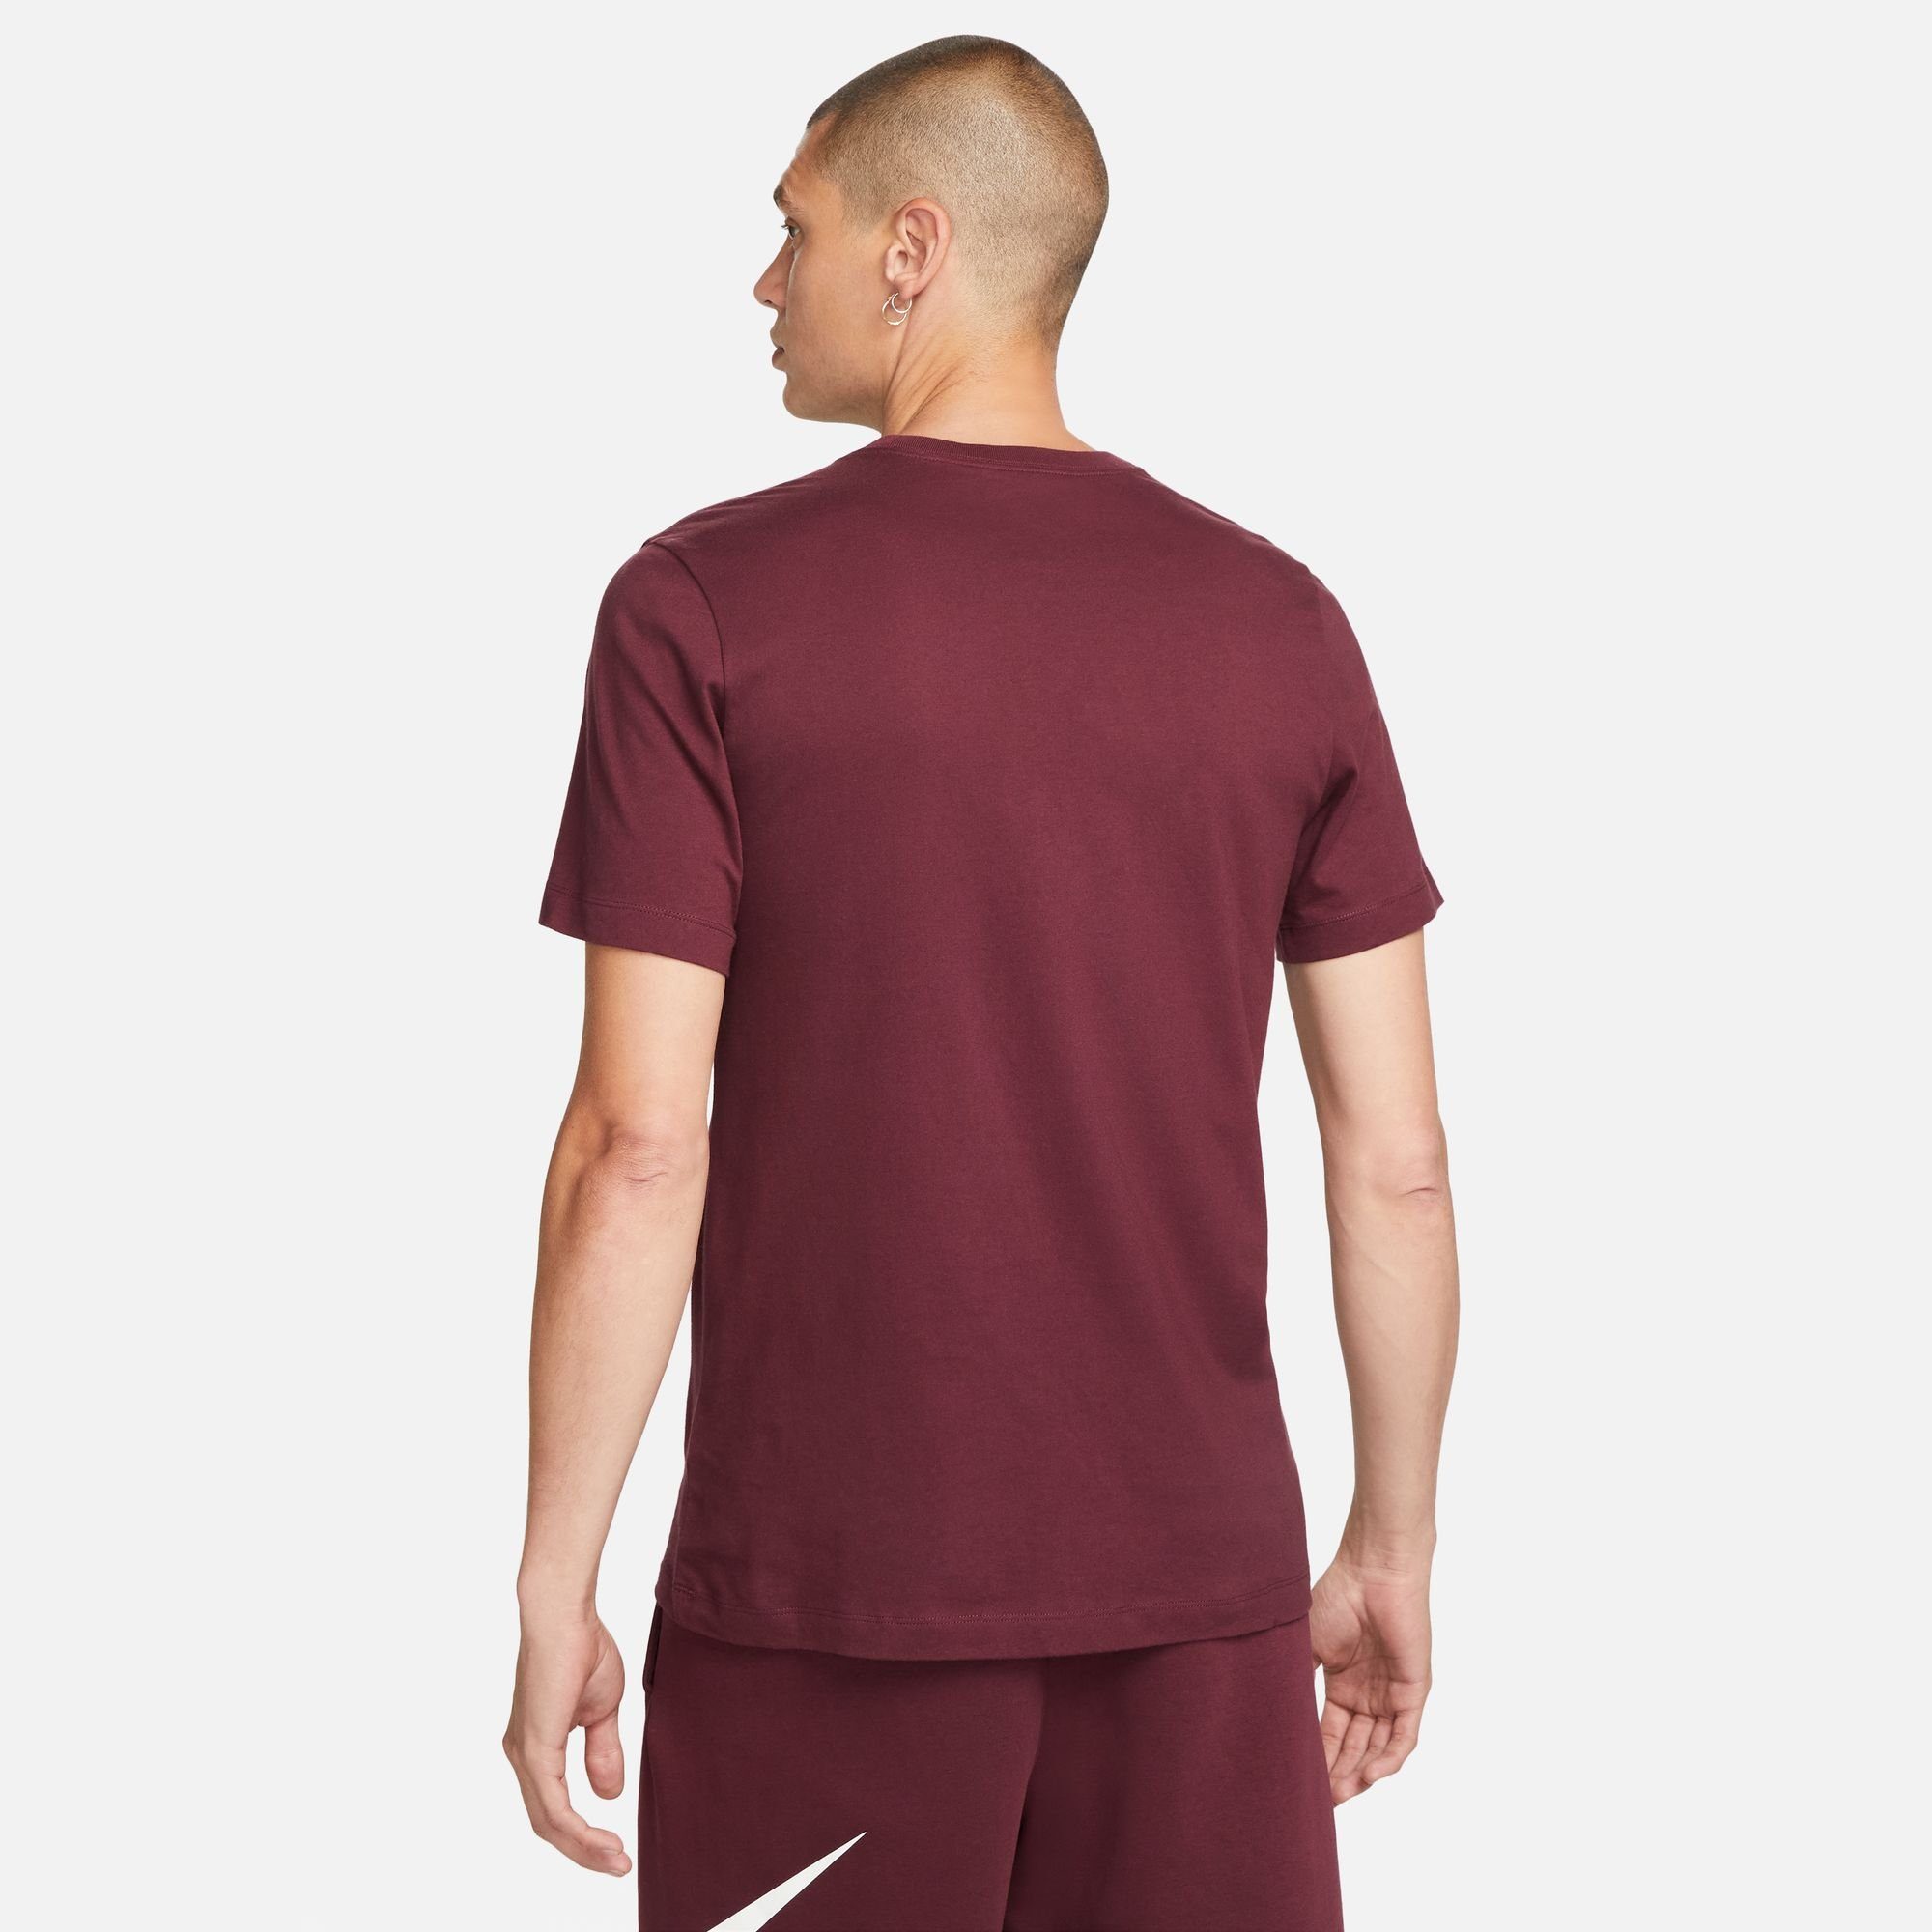 JDI MEN'S Sportswear NIGHT T-SHIRT MAROON T-Shirt Nike